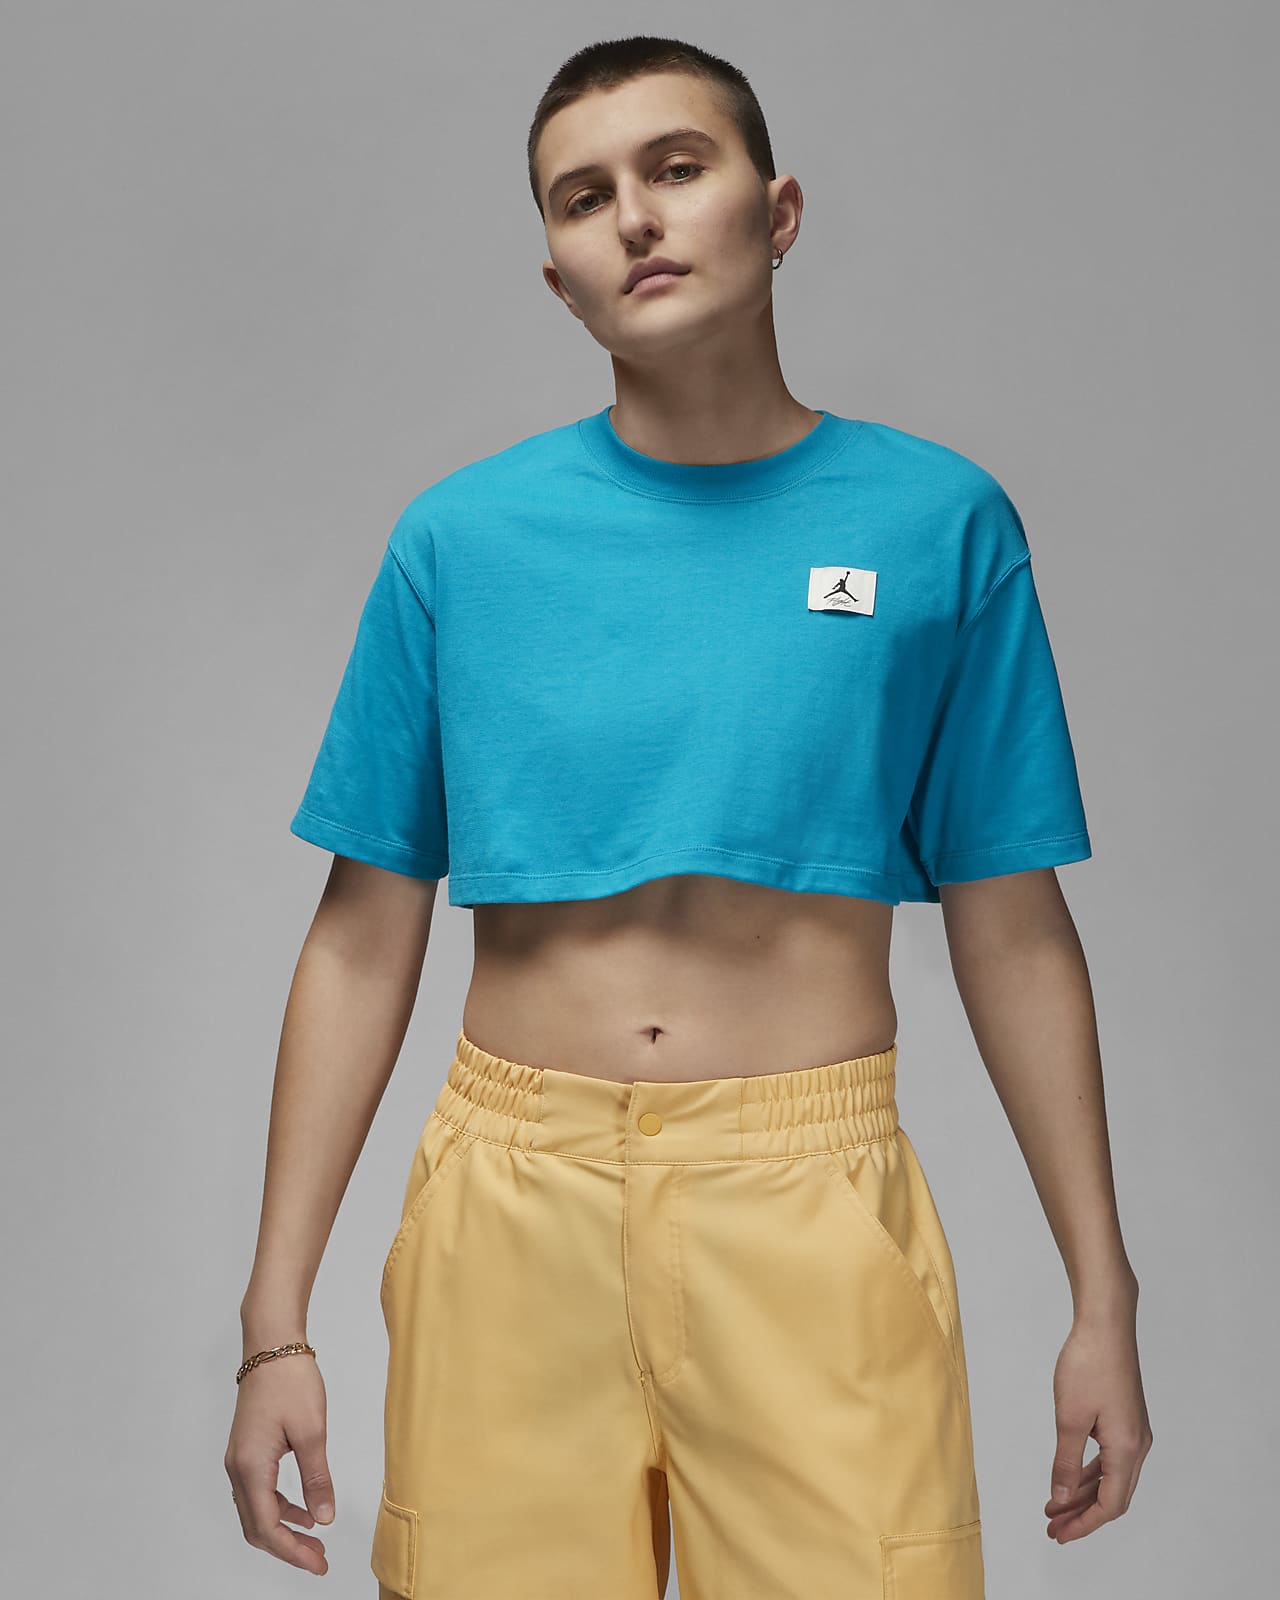 Jordan Sport Camiseta corta - Mujer